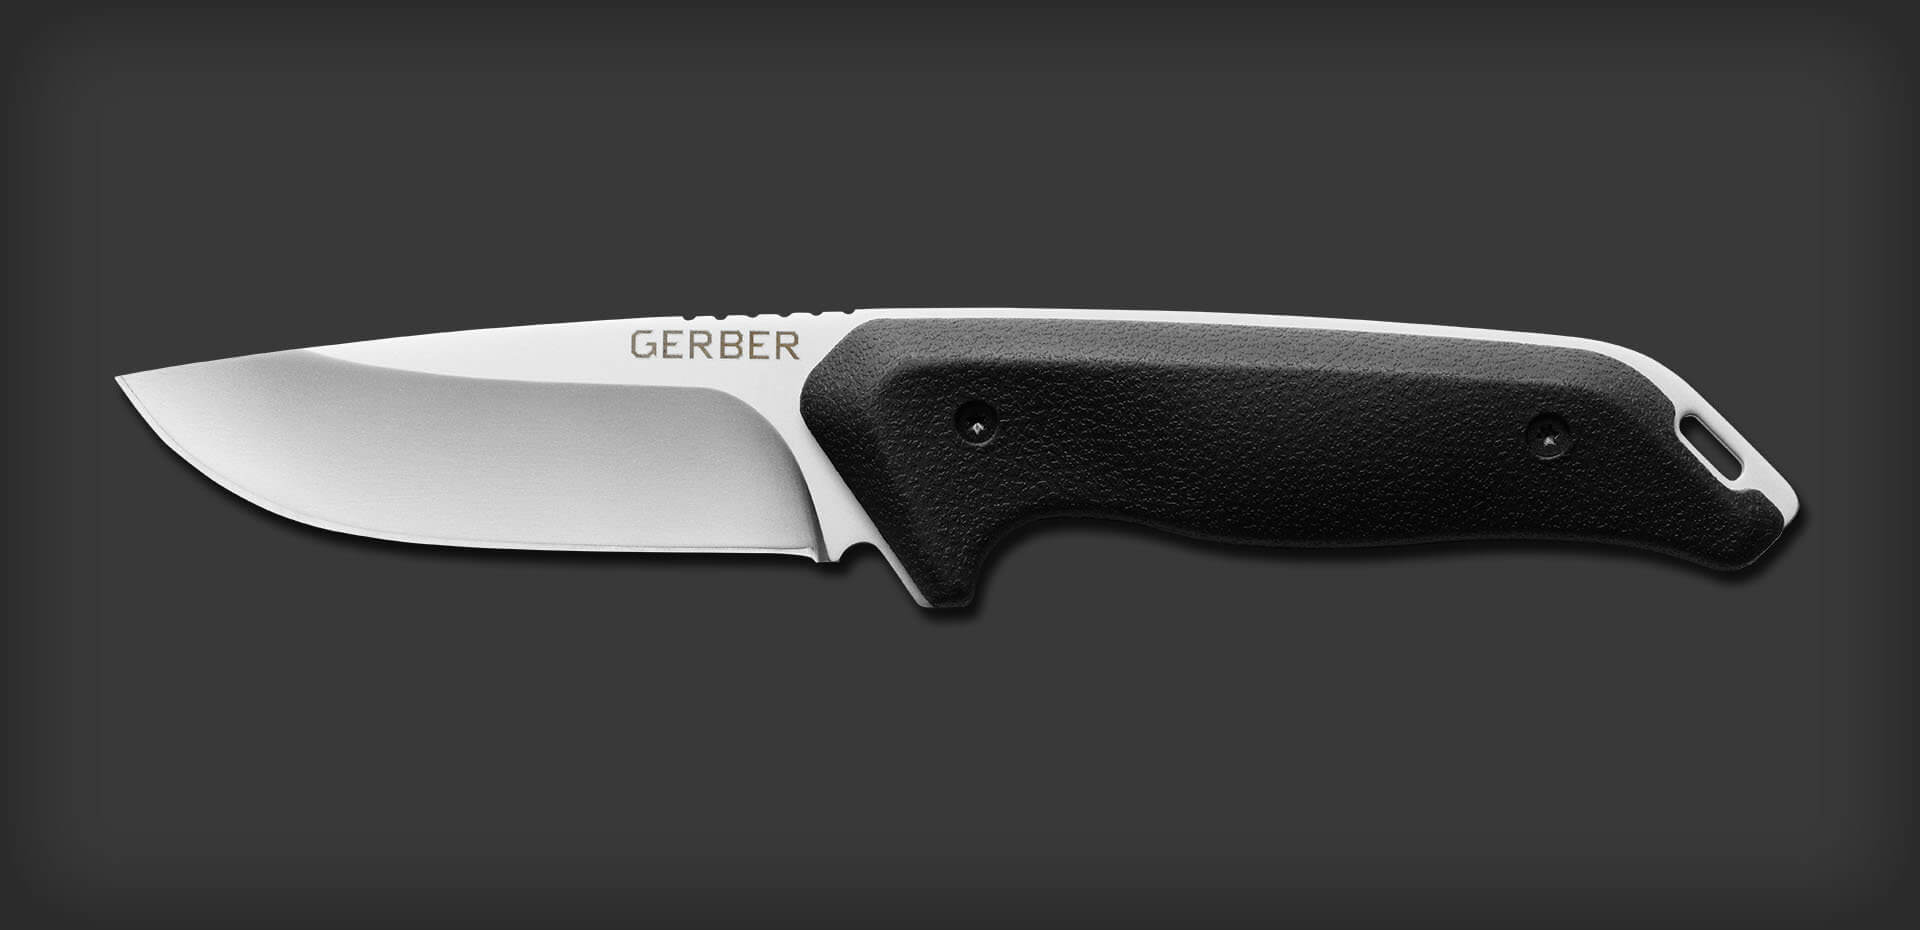 Best Field Dressing Knife - Gerber Moment Fixed Blade Knife